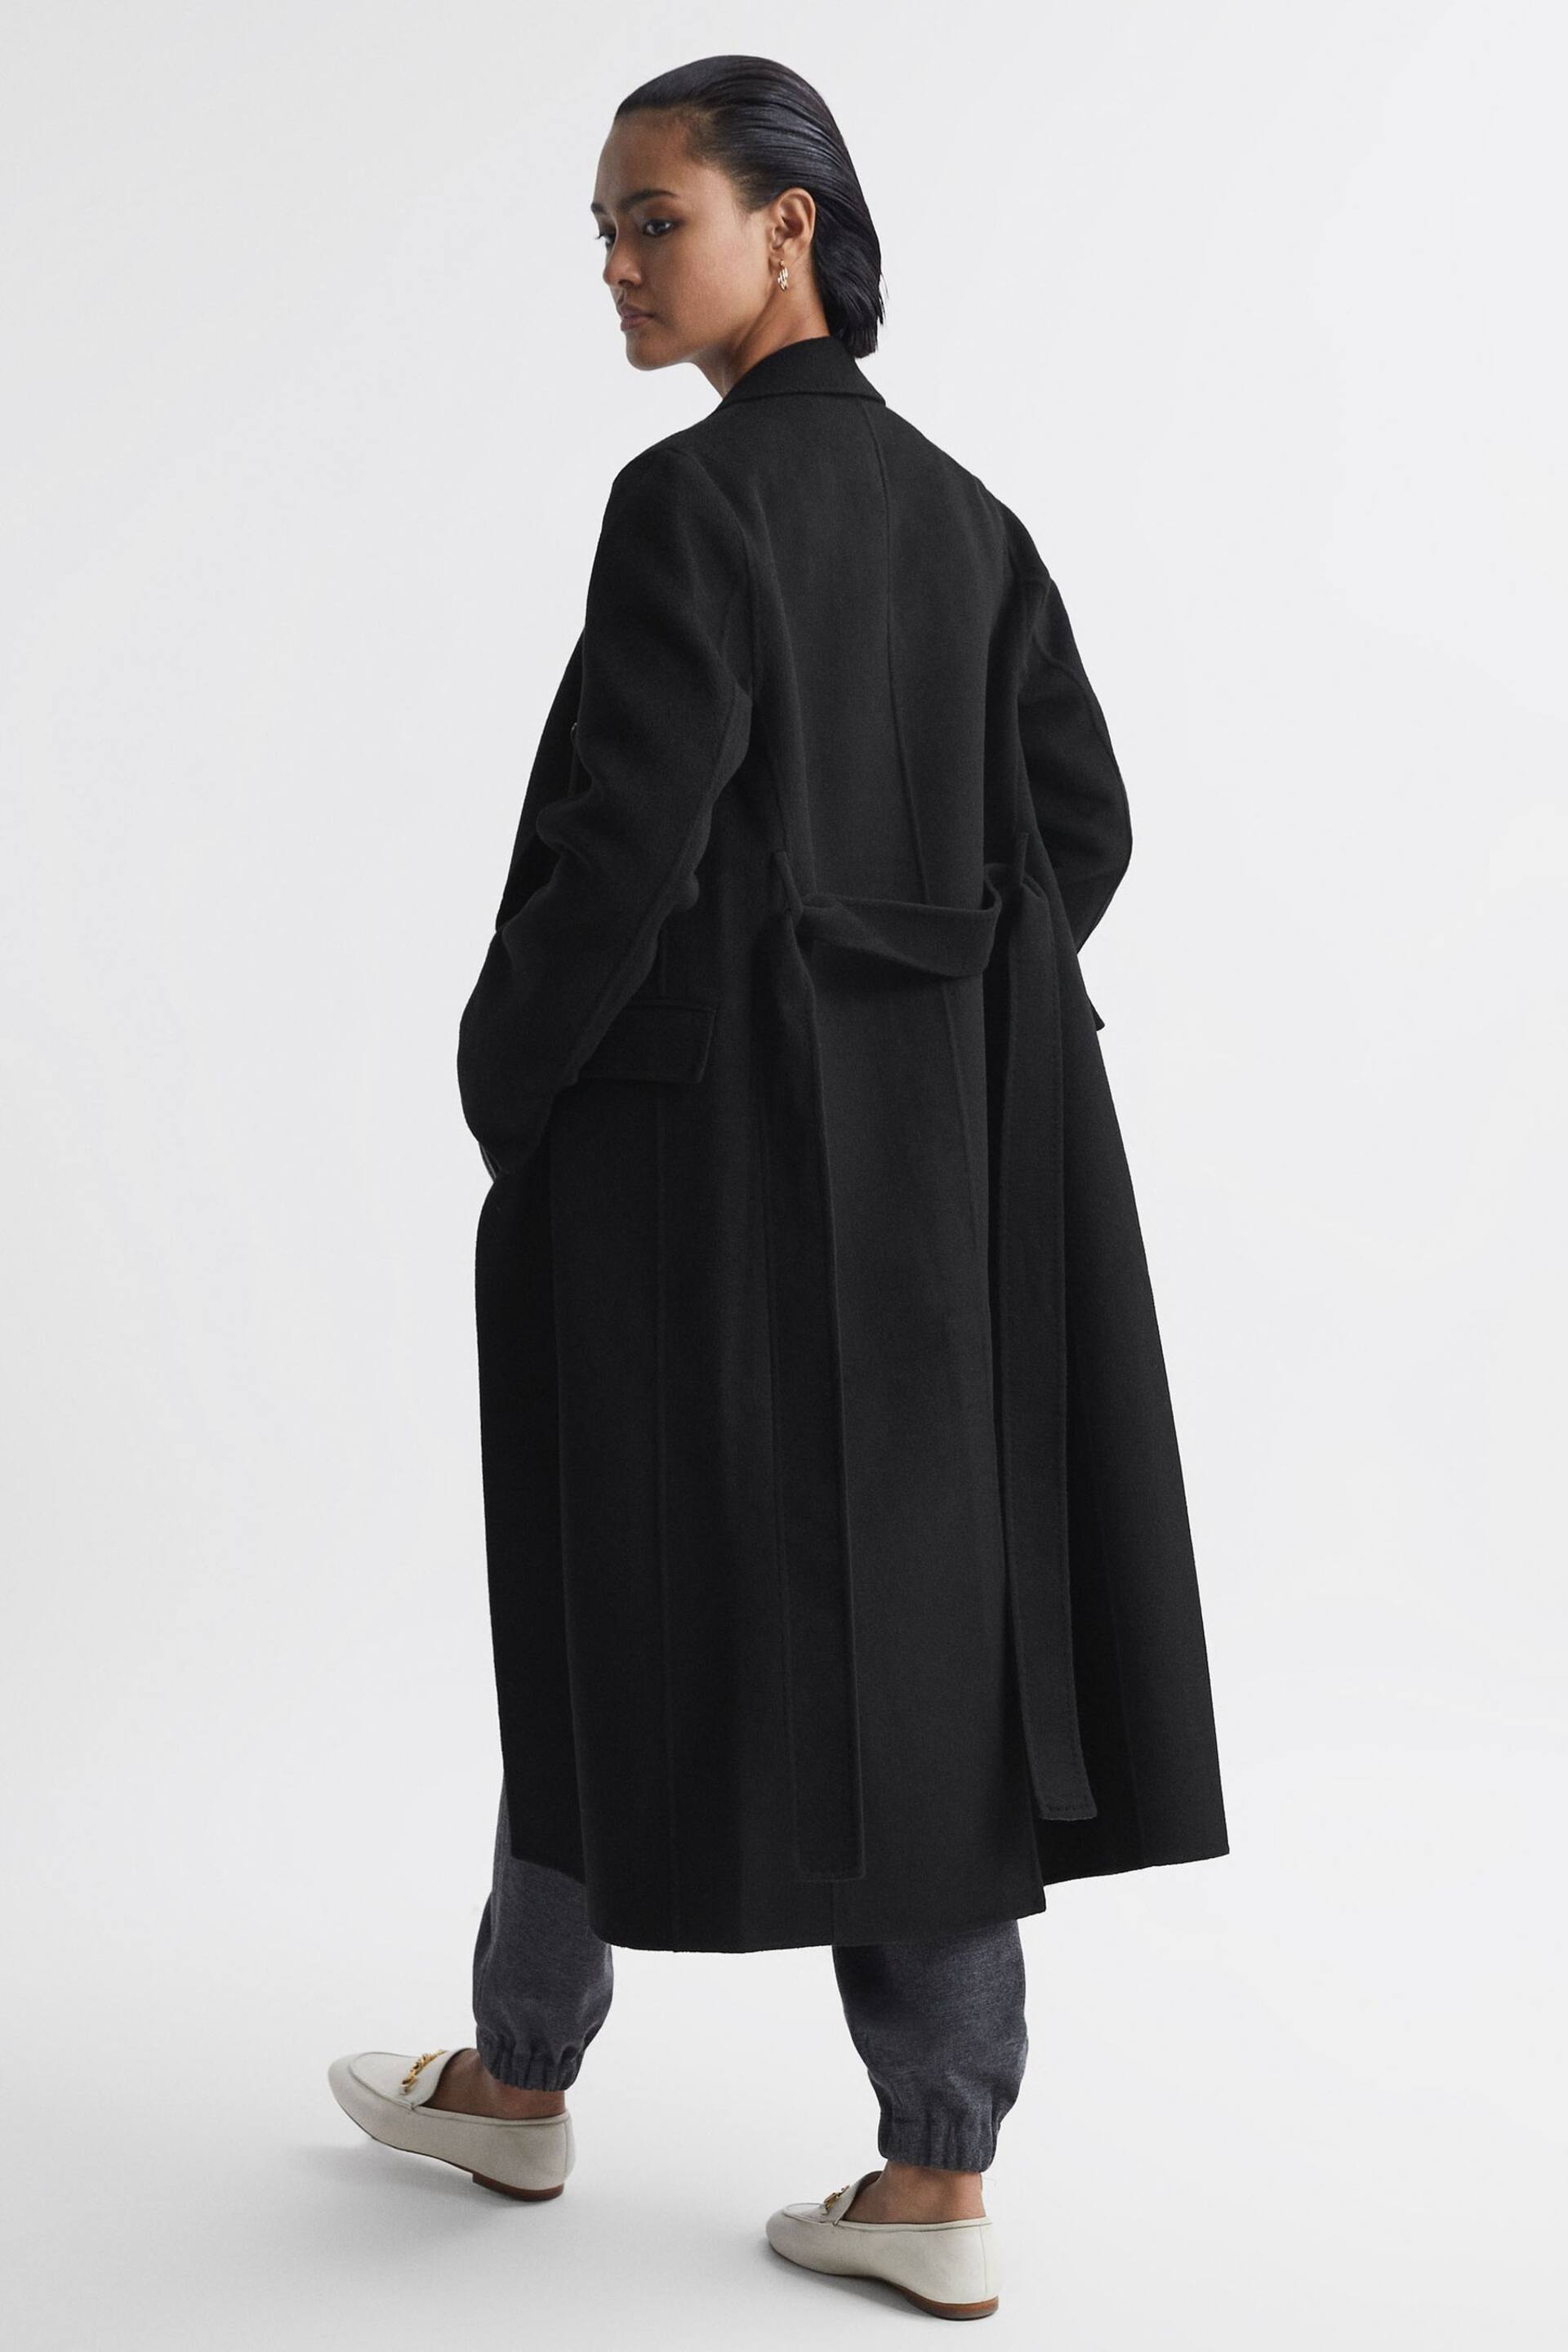 Reiss Black Arla Petite Relaxed Wool Blend Blindseam Belted Coat - Image 5 of 6